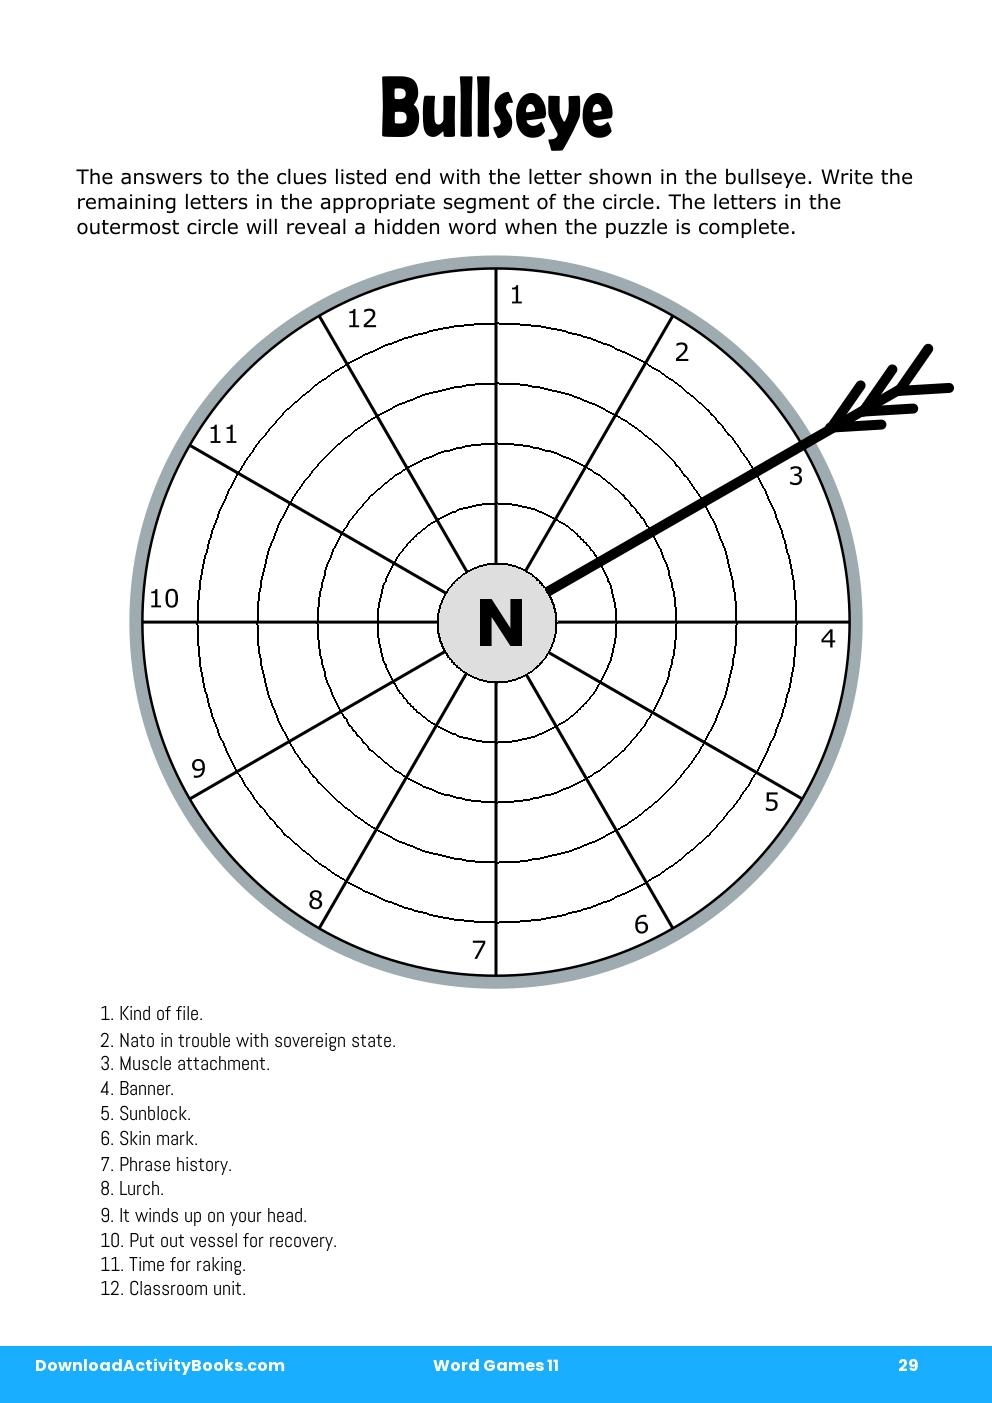 Bullseye in Word Games 11